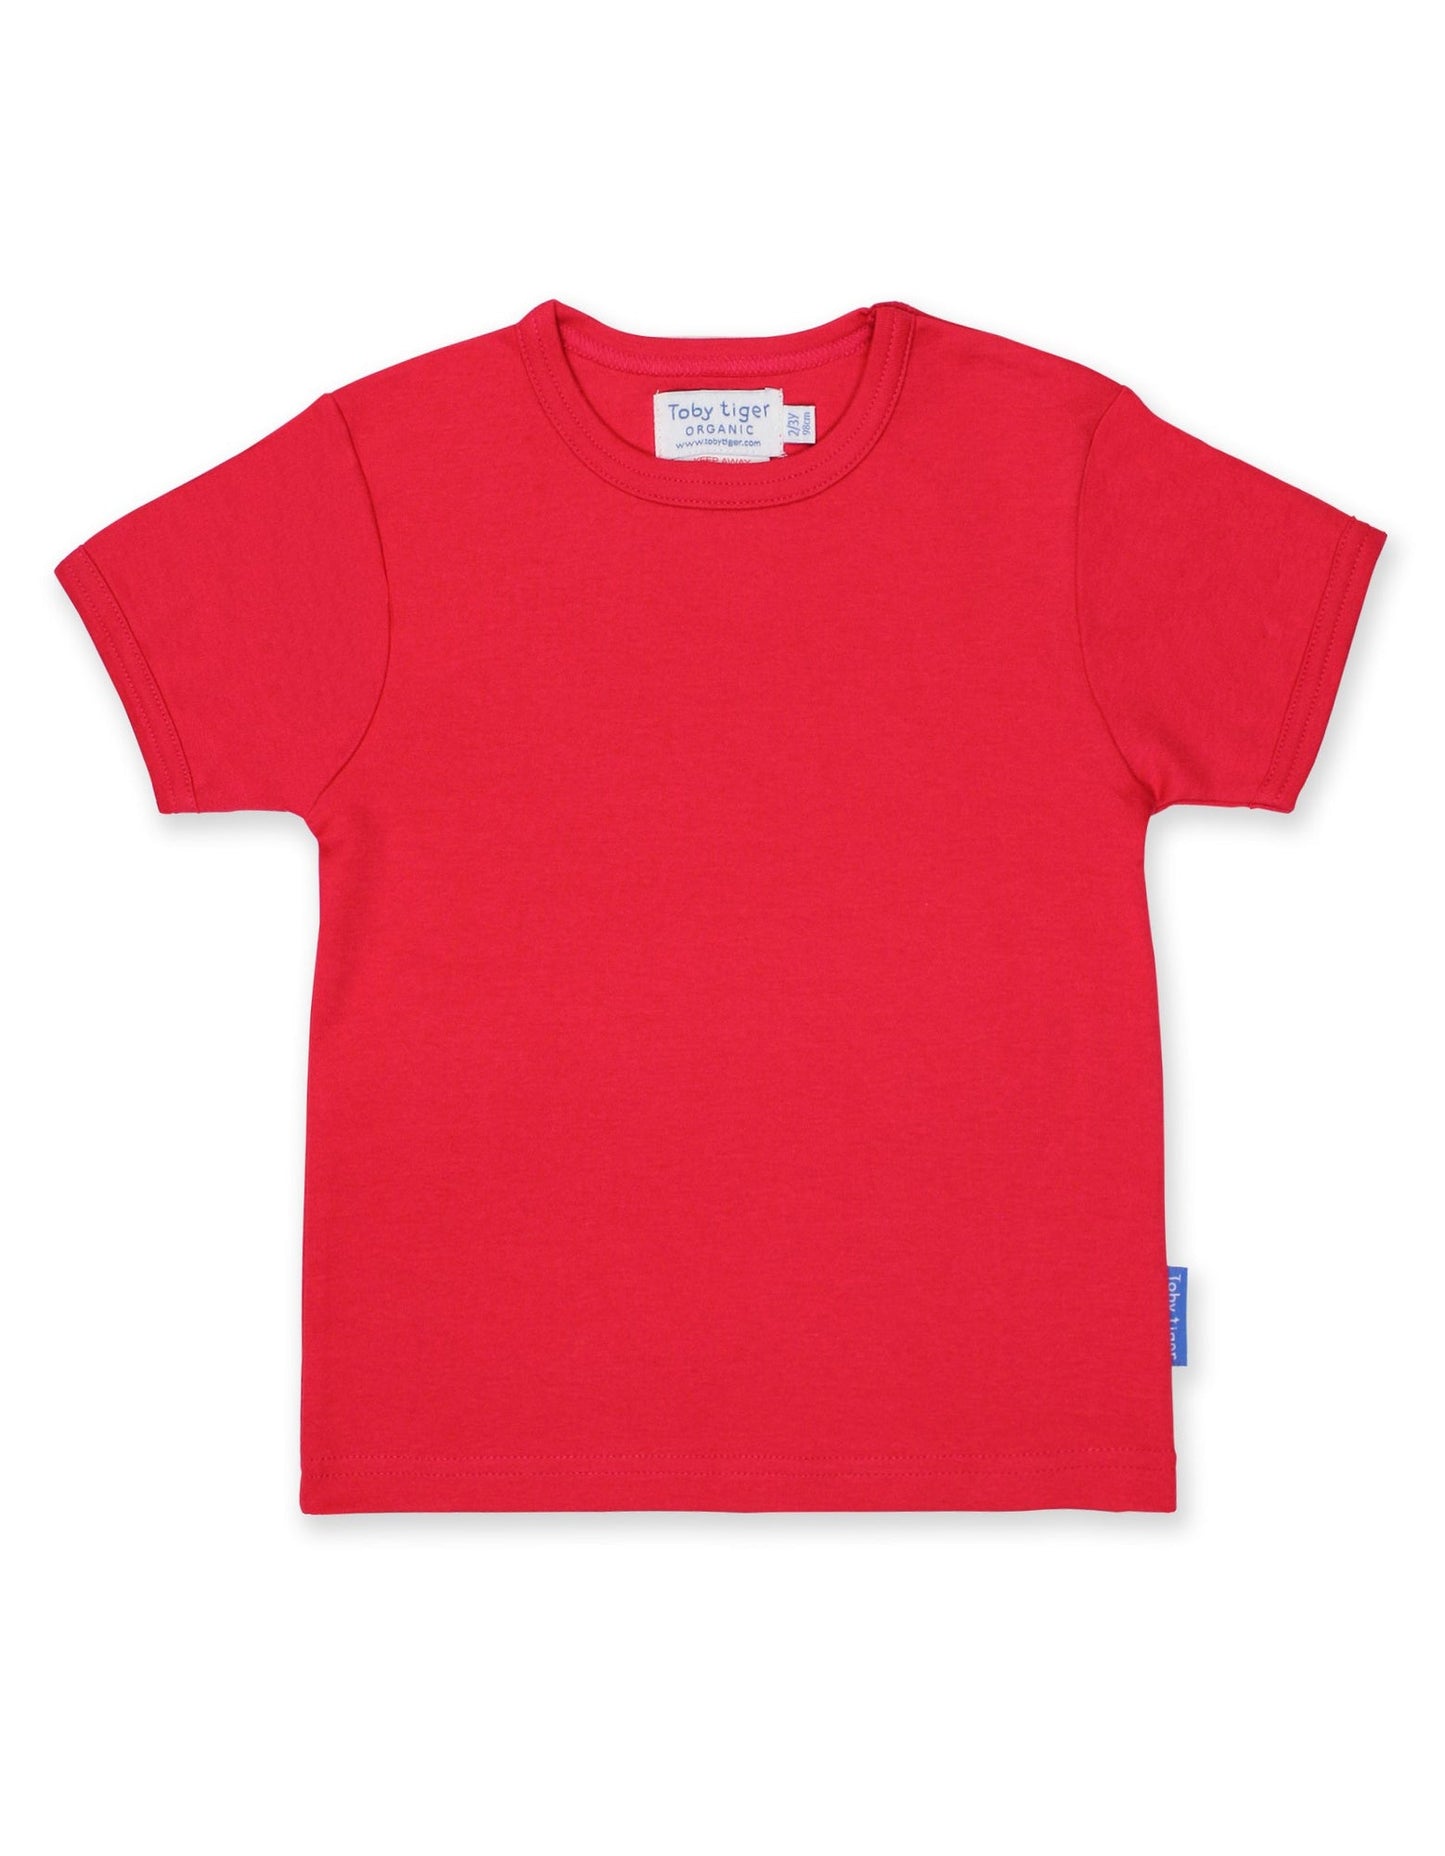 Red Short Sleeve T-Shirt